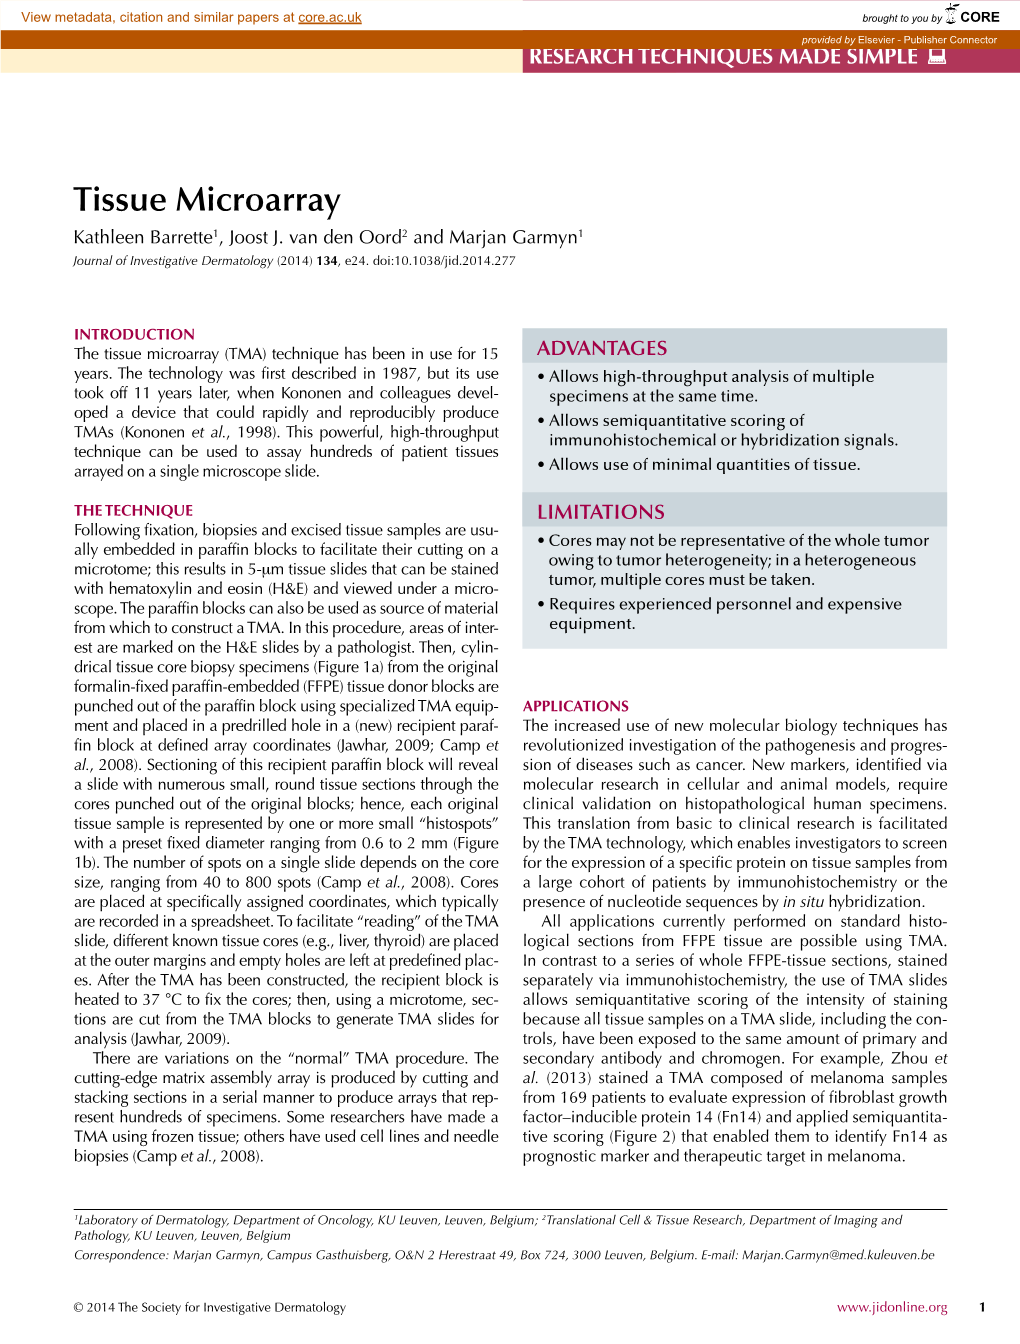 Tissue Microarray Kathleen Barrette1, Joost J